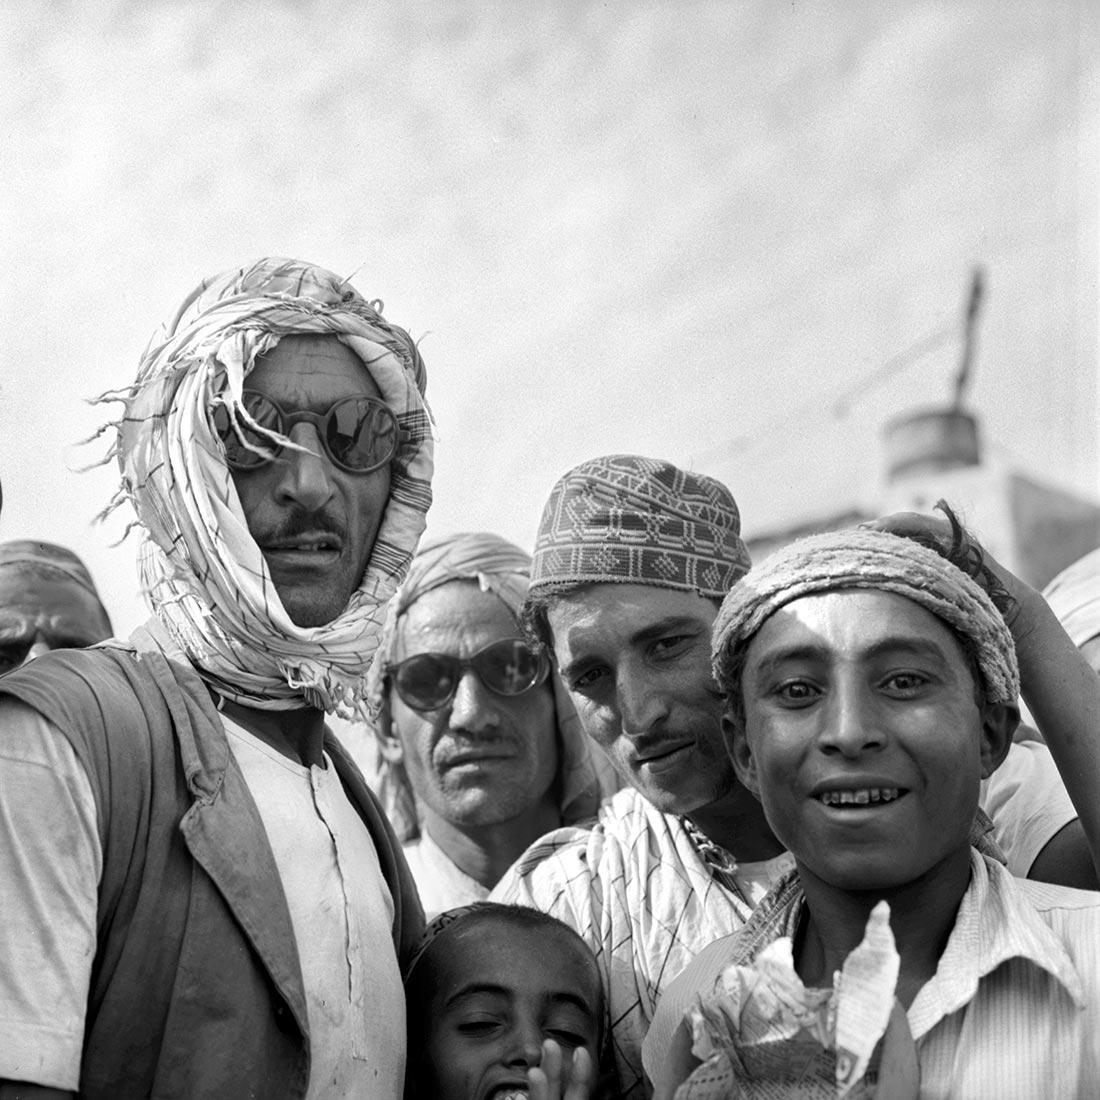 vivian maier 1959 yemen